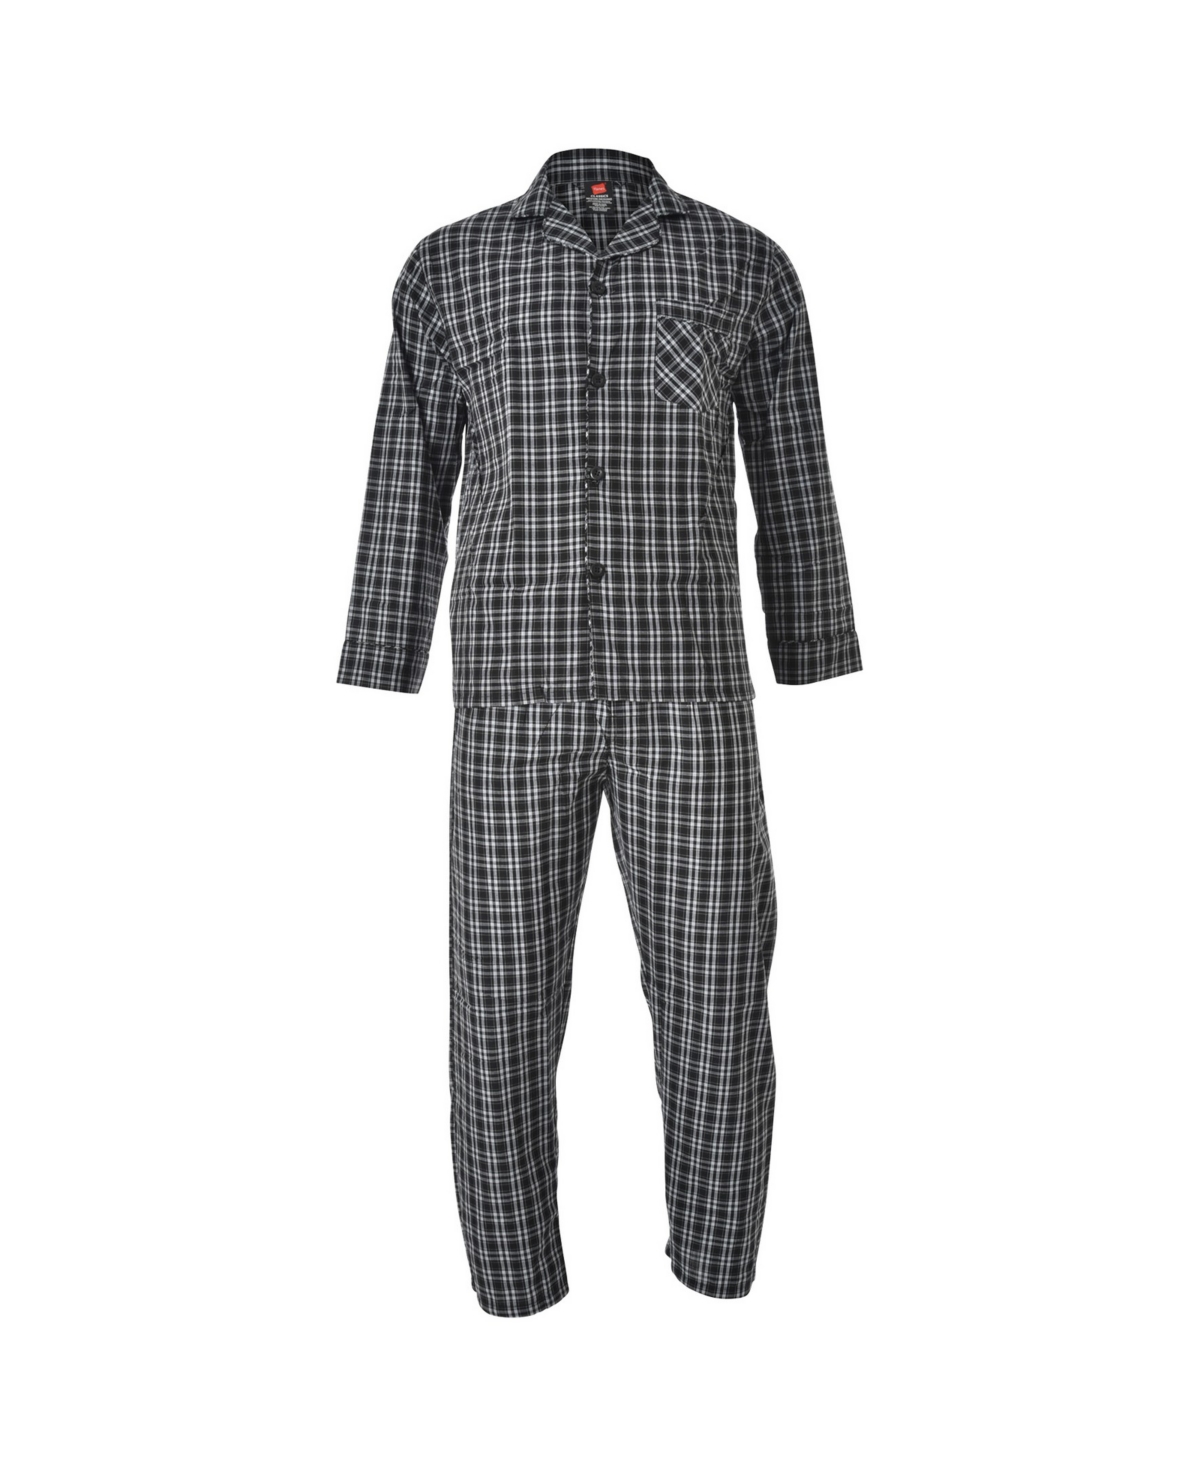 Hanes Men's Big and Tall Cvc Broadcloth Pajama Set - Blue Plaid